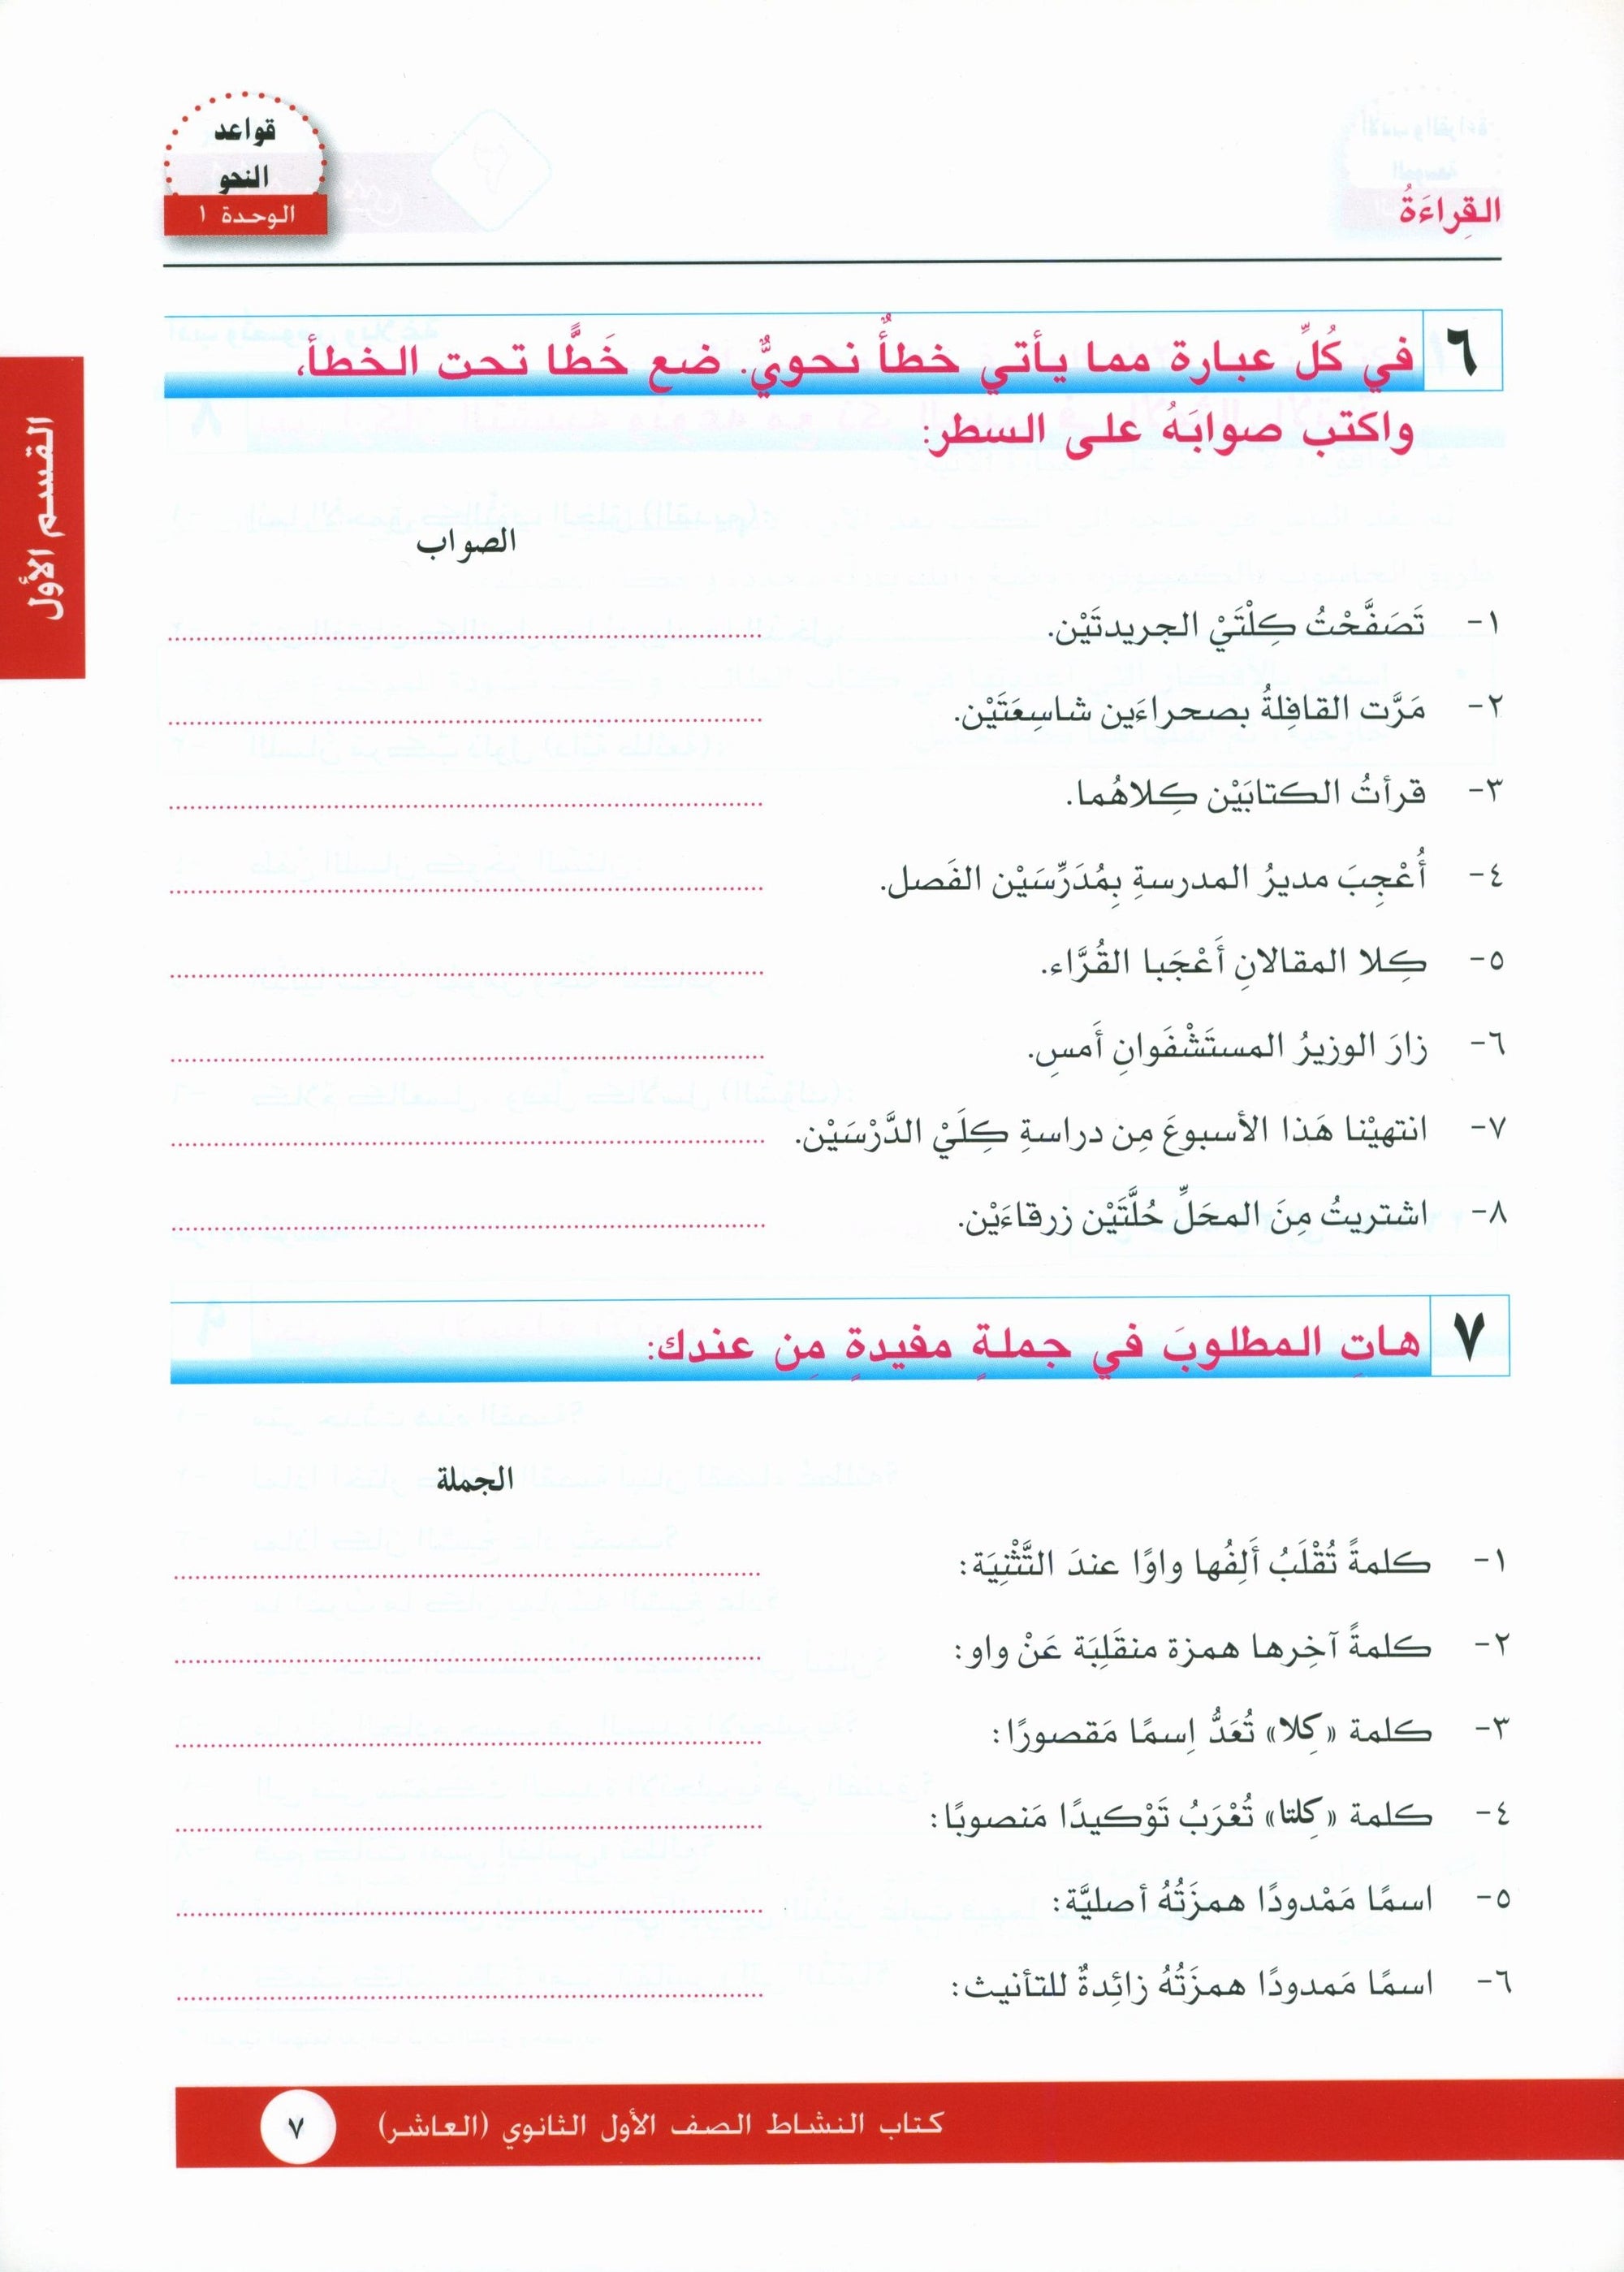 I Love Arabic Workbook Level 10 أحب العربية كتاب التدريبات